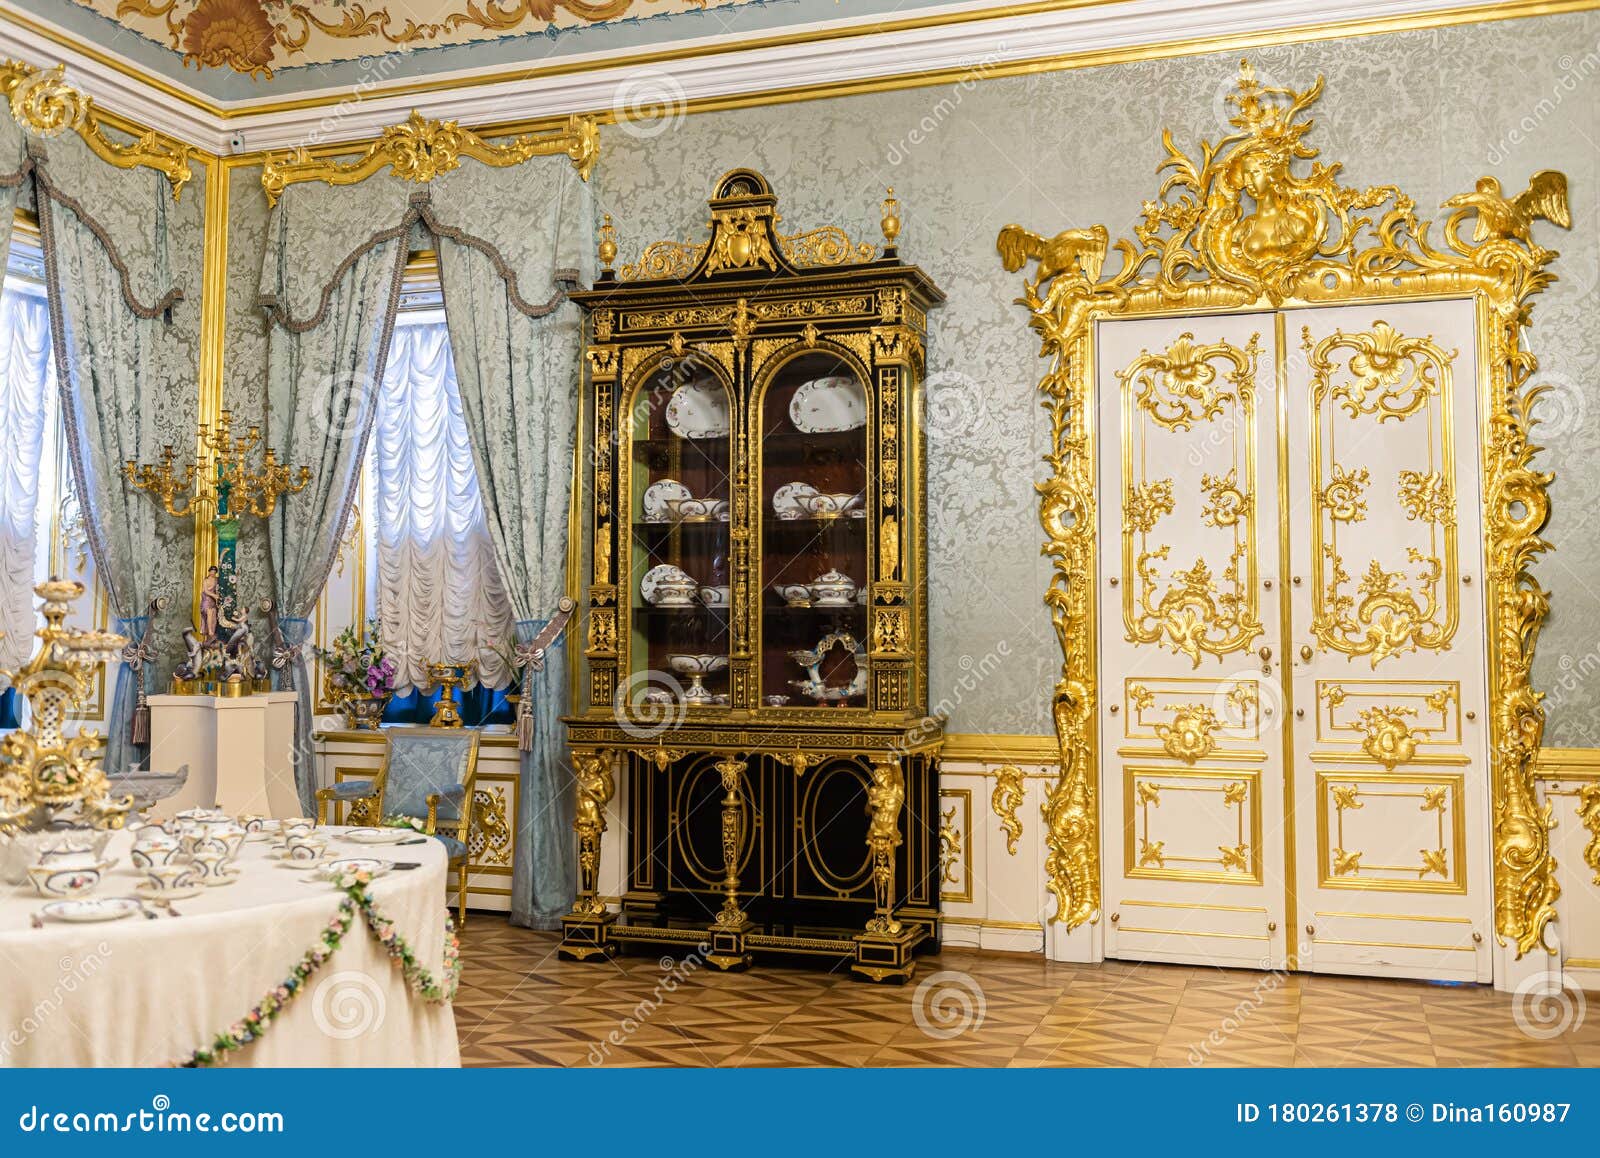 Monplaisir - The Bathhouse of the Tsars | Peterhof